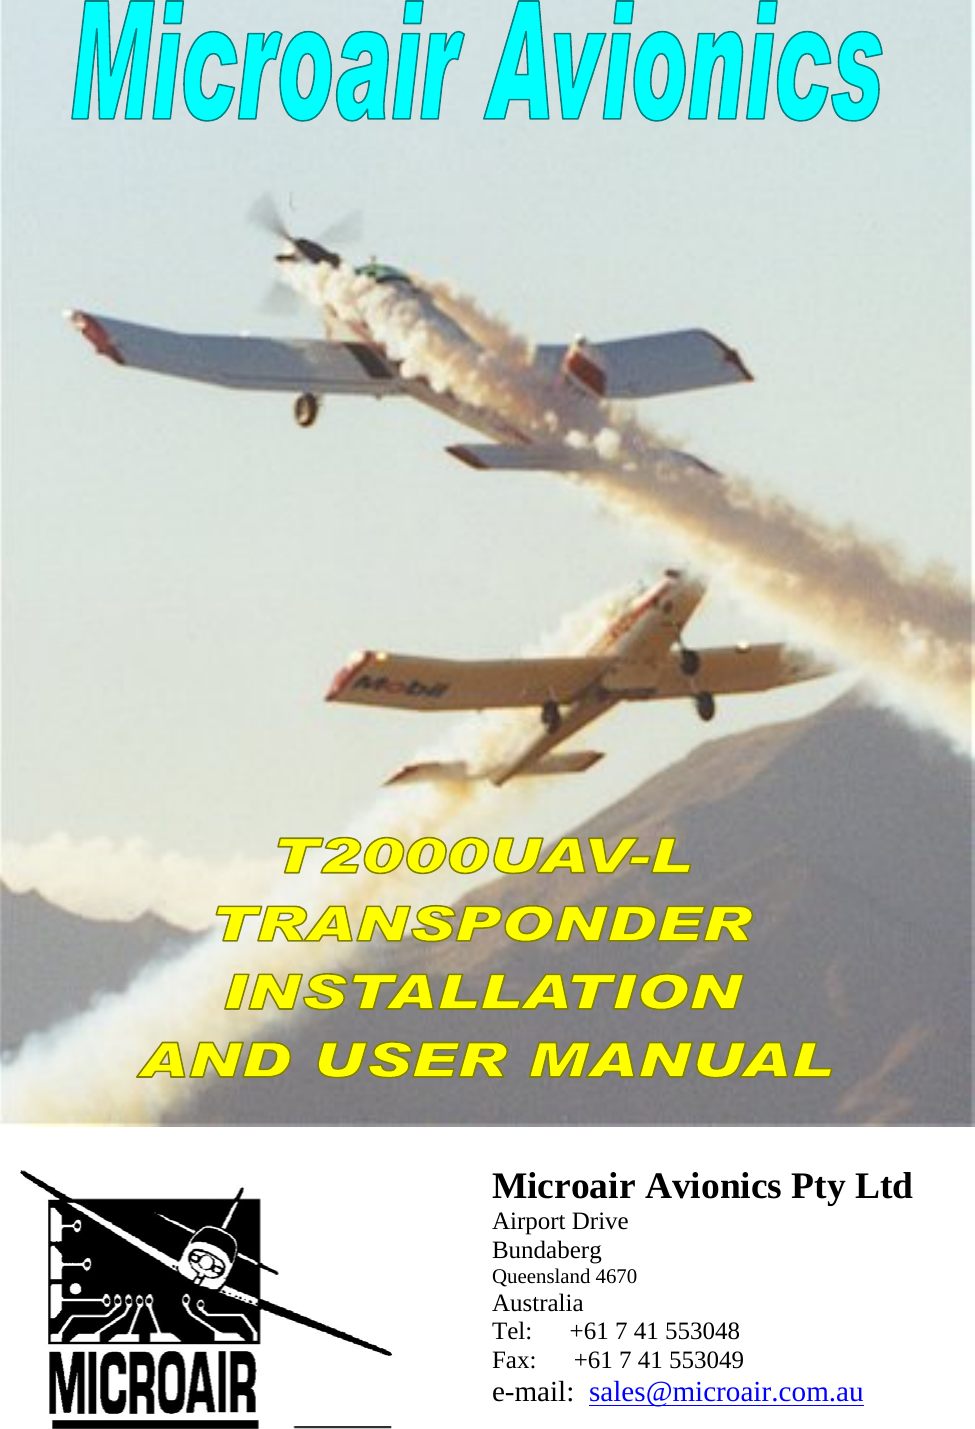              Microair Avionics Pty Ltd Airport Drive Bundaberg Queensland 4670 Australia Tel:      +61 7 41 553048 Fax:      +61 7 41 553049 e-mail:  sales@microair.com.au  